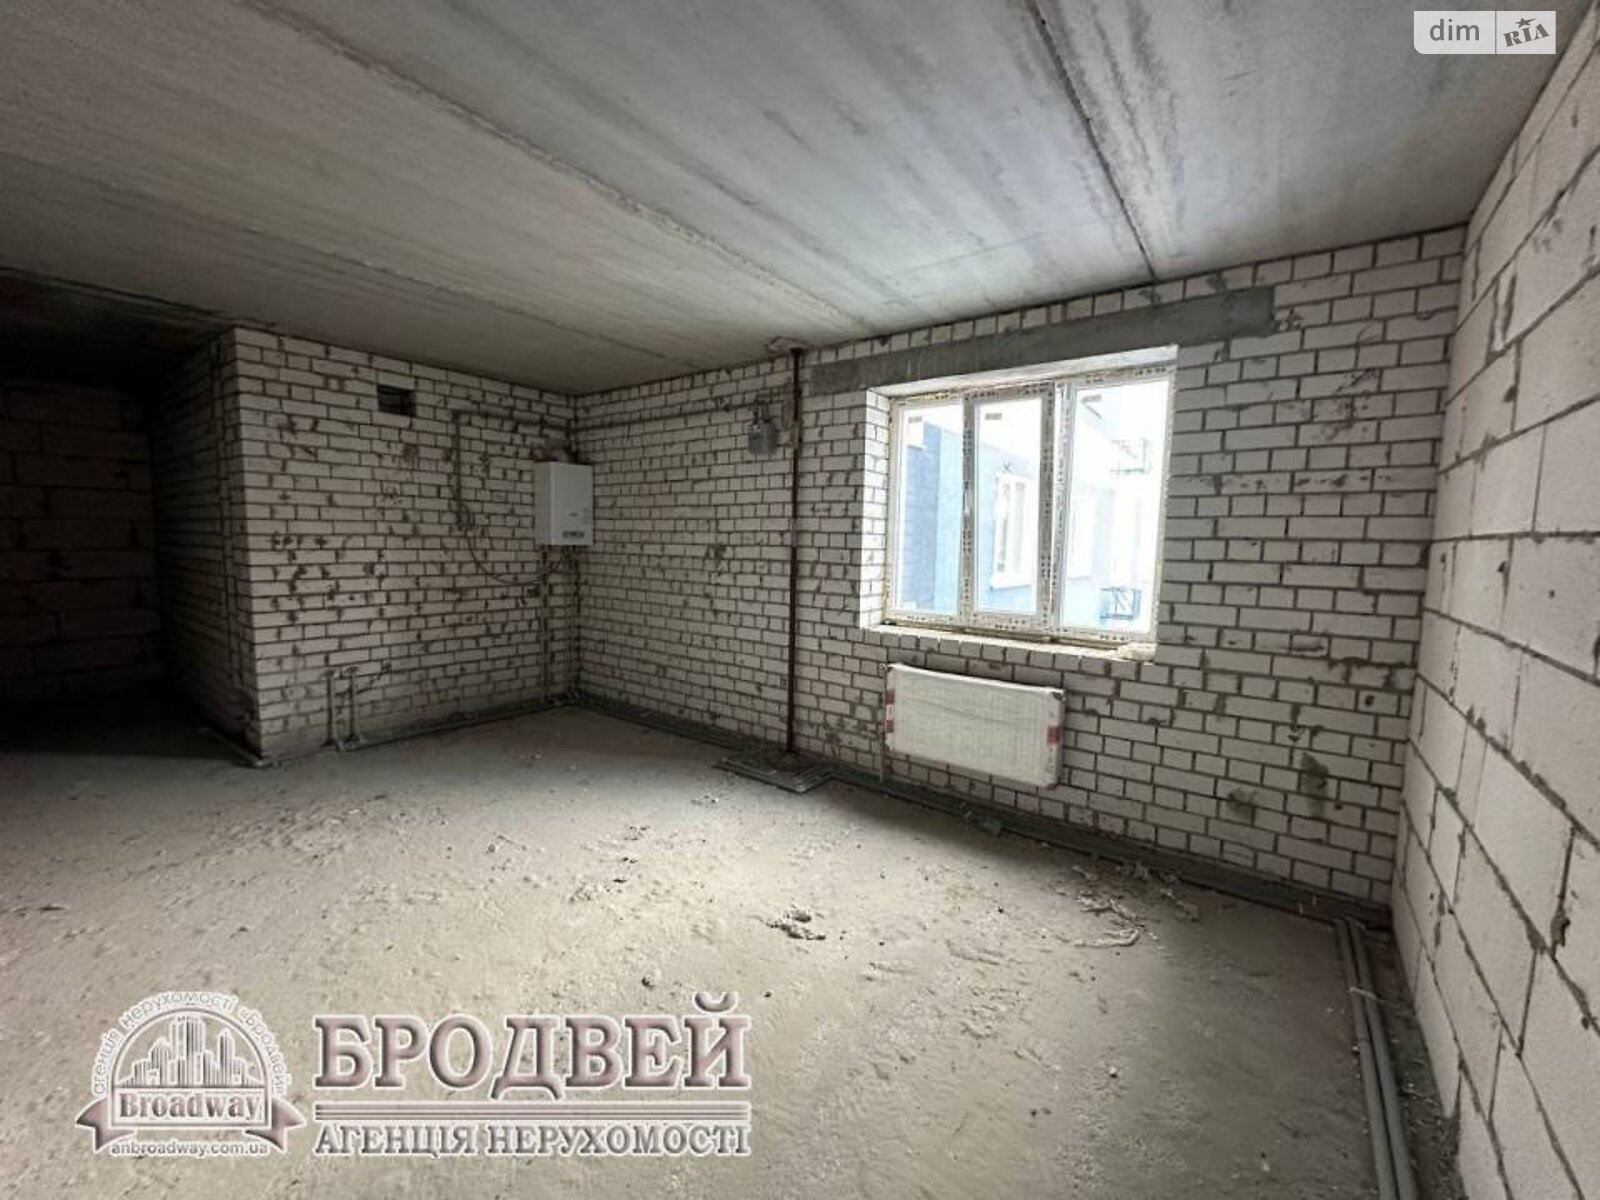 Продажа двухкомнатной квартиры в Чернигове, на ул. Лесная 42, район Яловщина фото 1